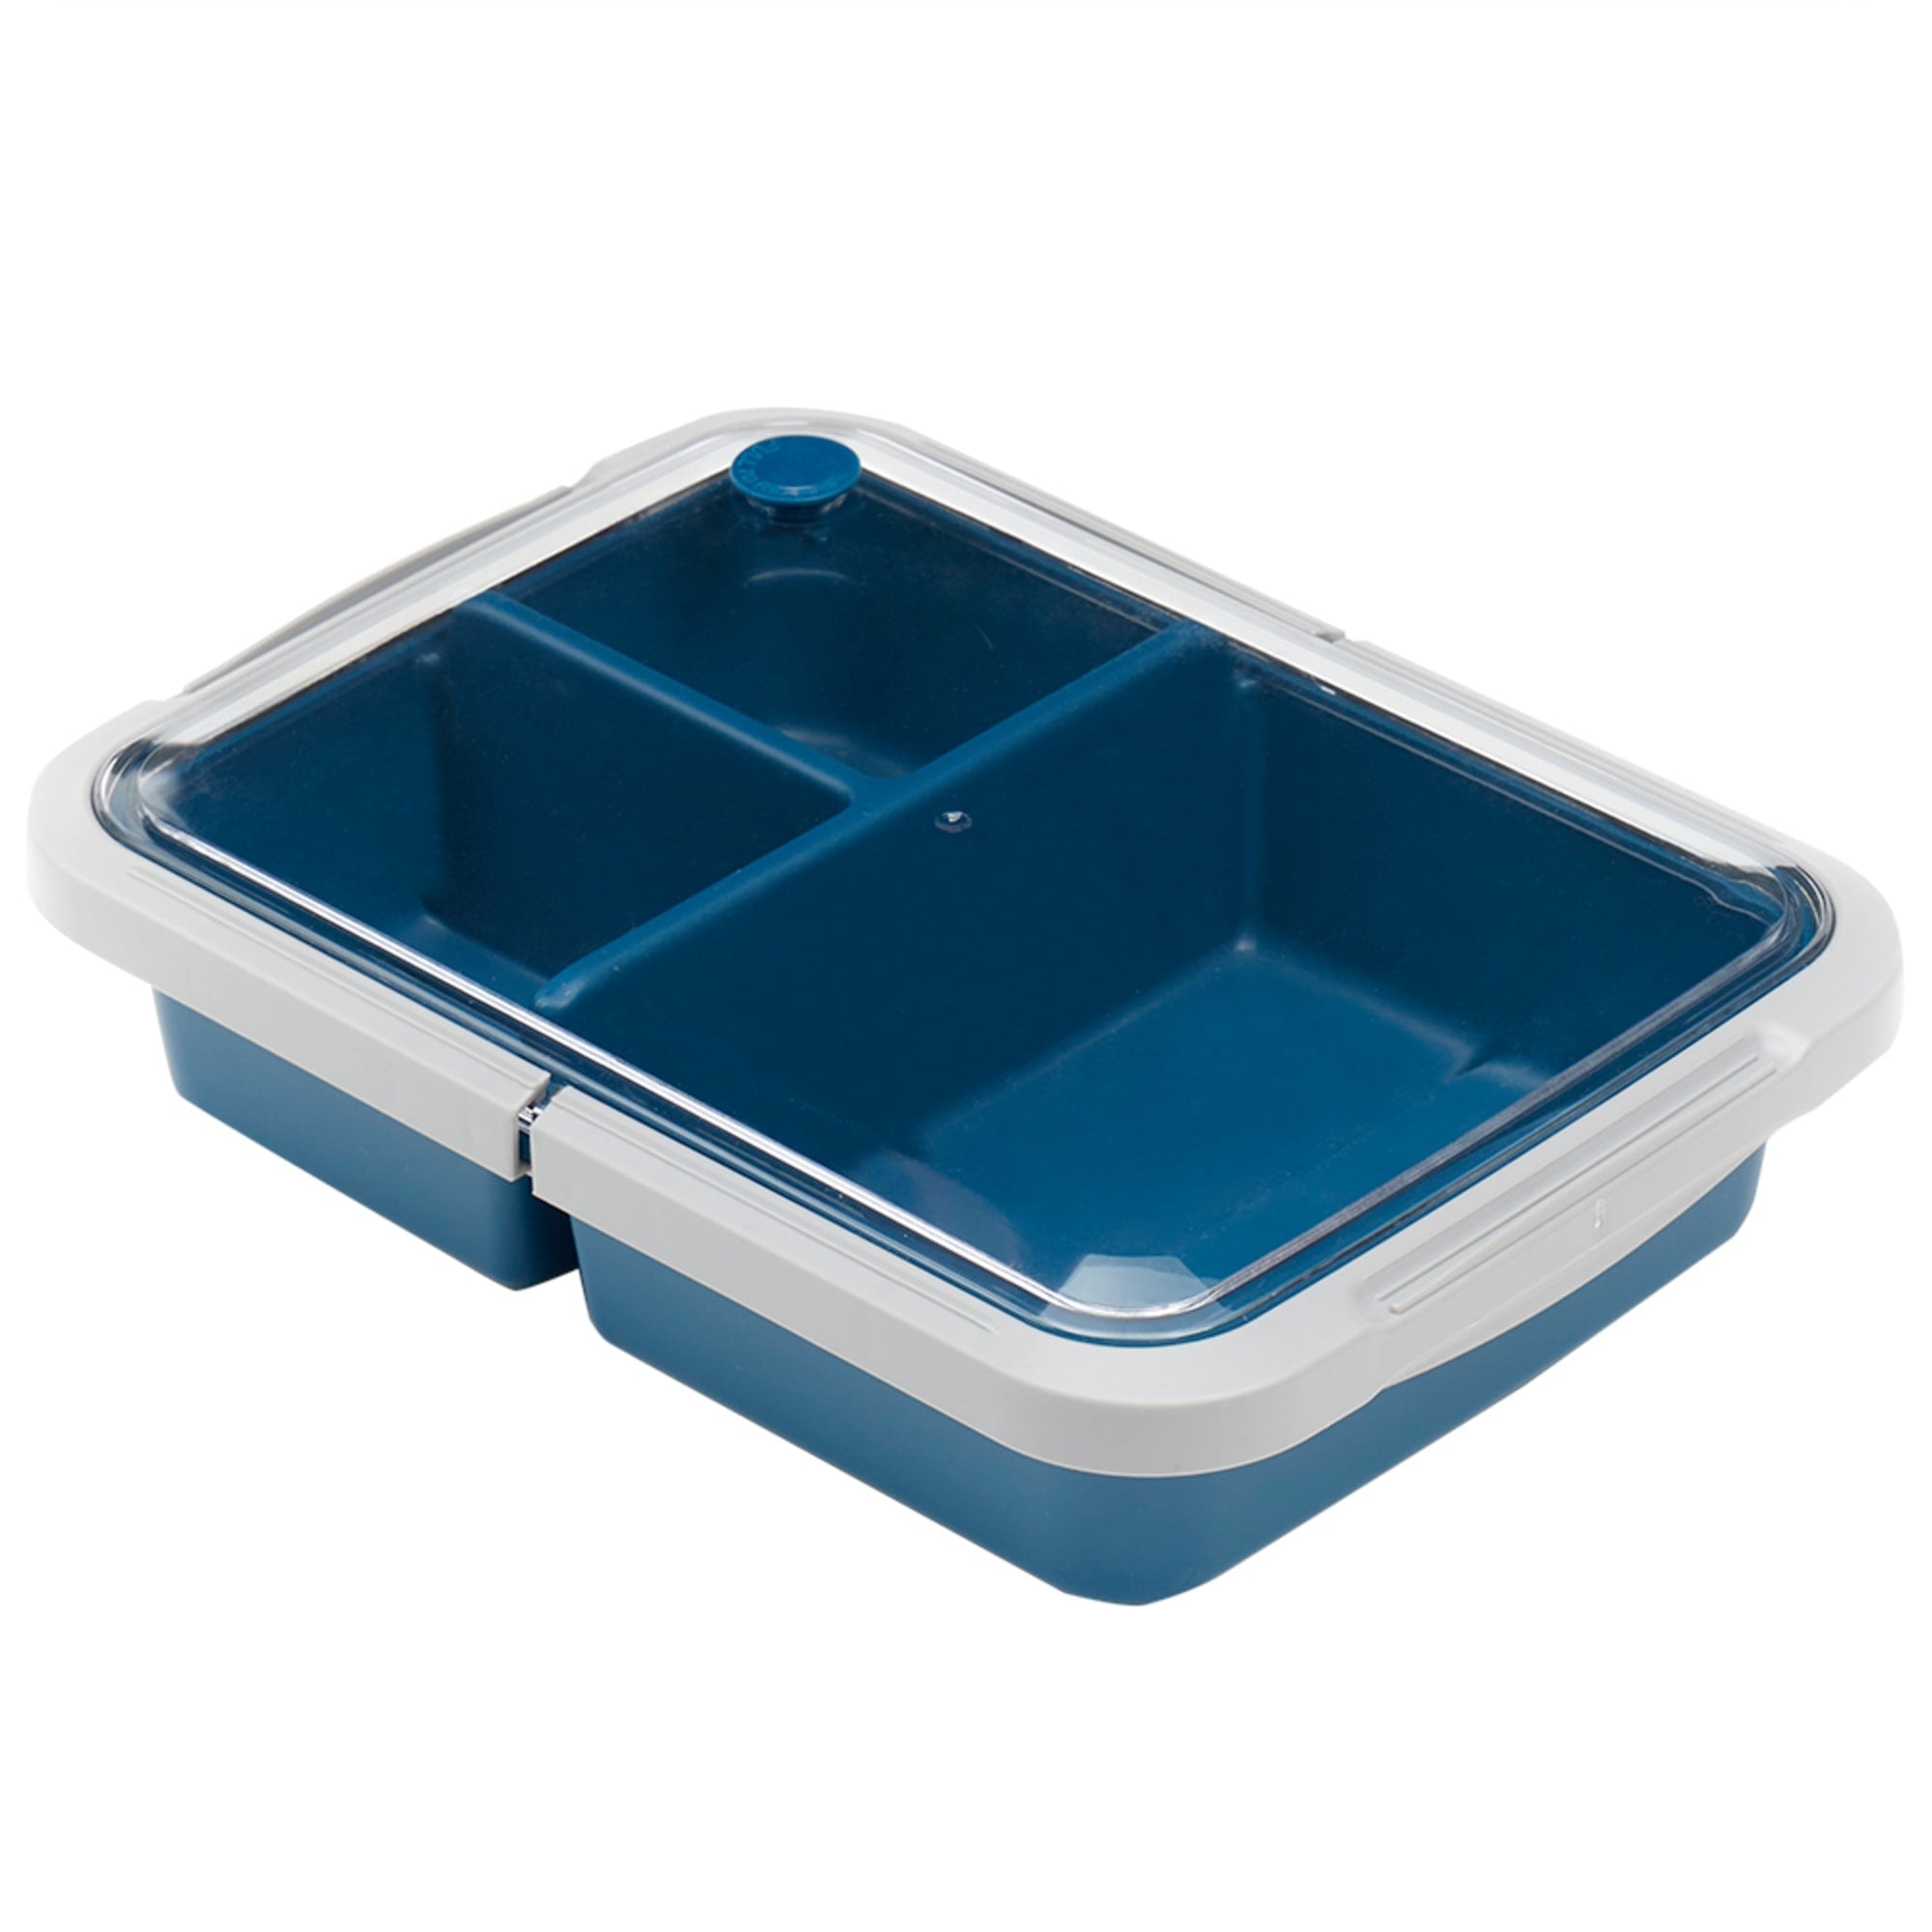 Foam Lunch Box 3 Compartments 2,40x2,10x0,70cm (250 Units)